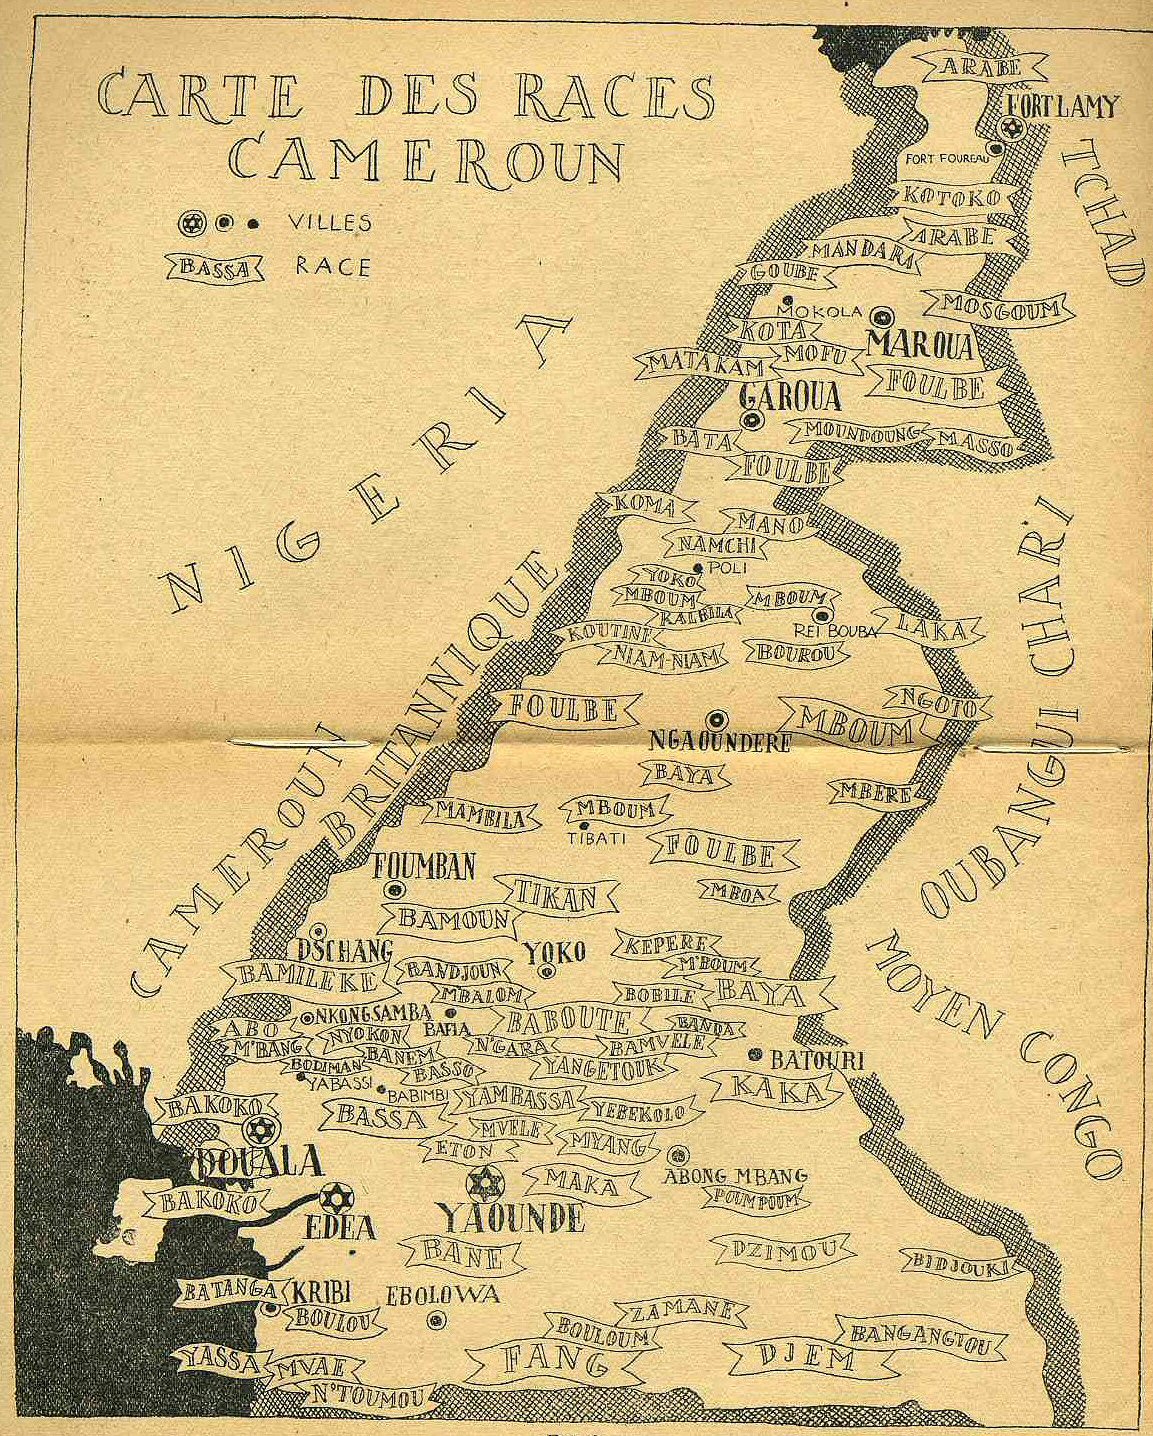 Cameroun 1951.jpg